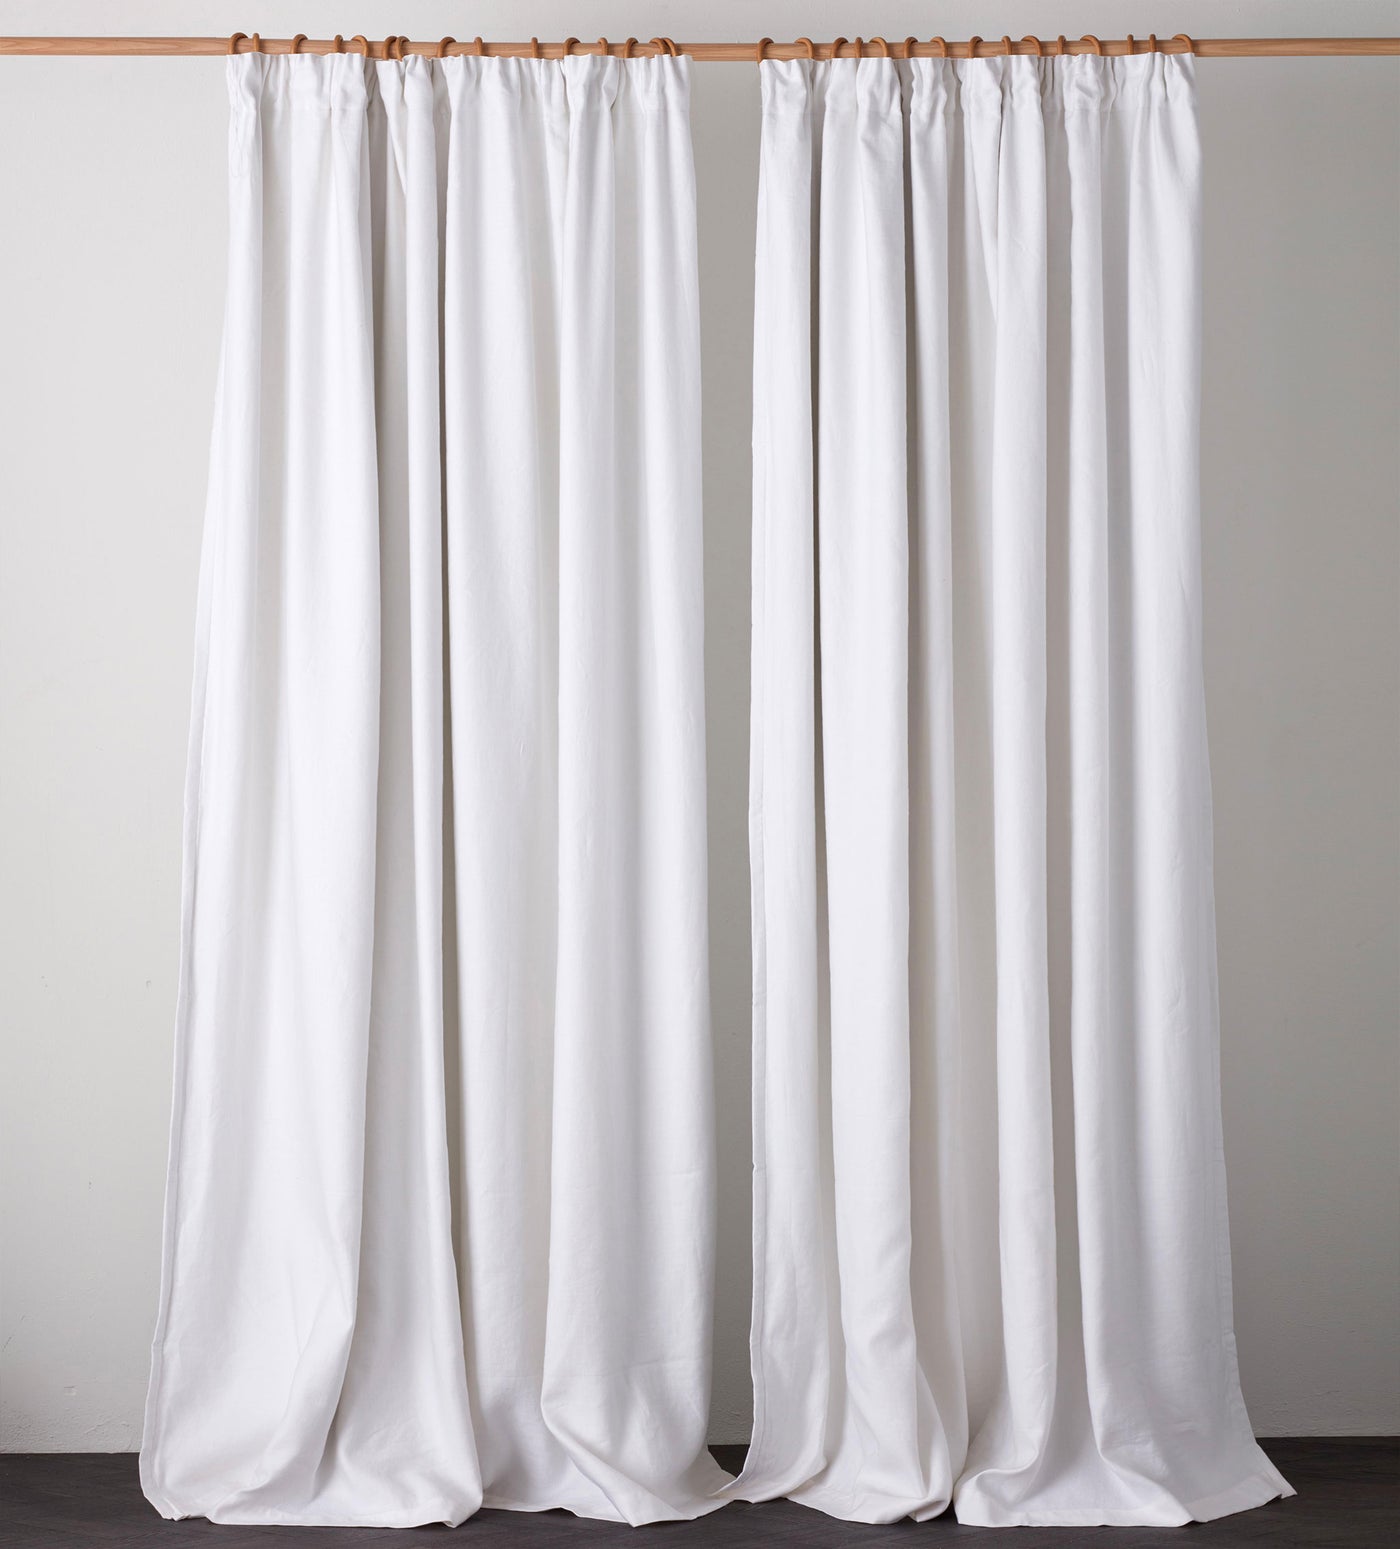 Off White Twill Cotton Linen Blackout Pencil Pleat Curtains (Pair)